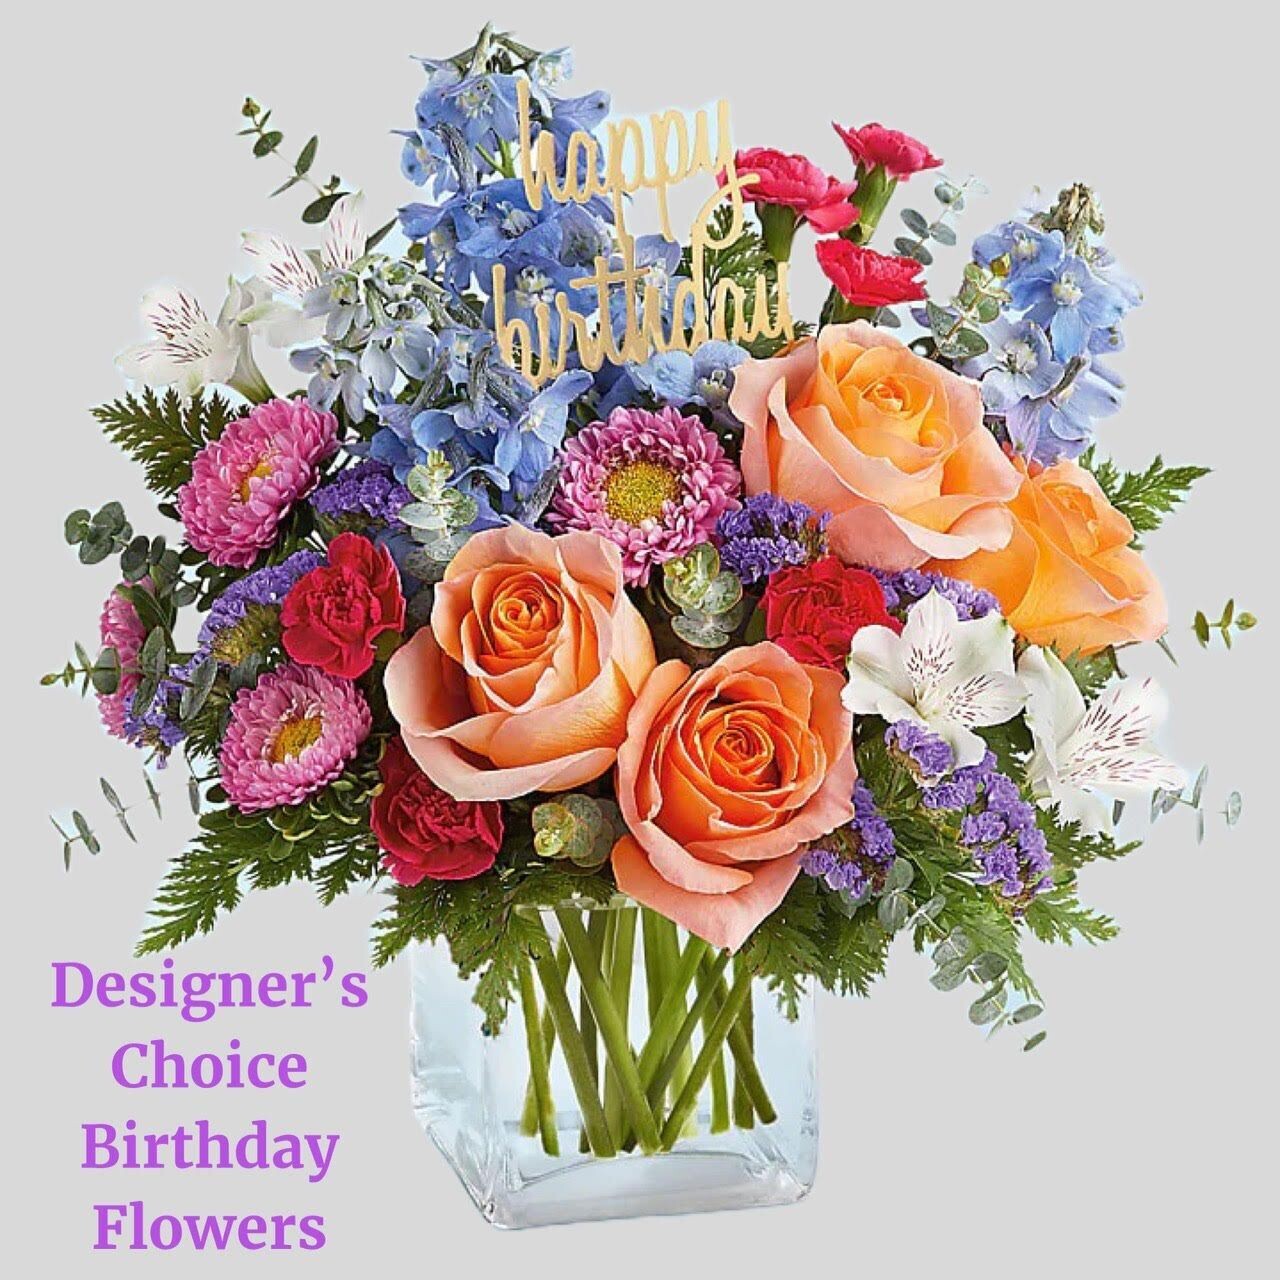 Designer's Choice Birthday Flowers - Deluxe